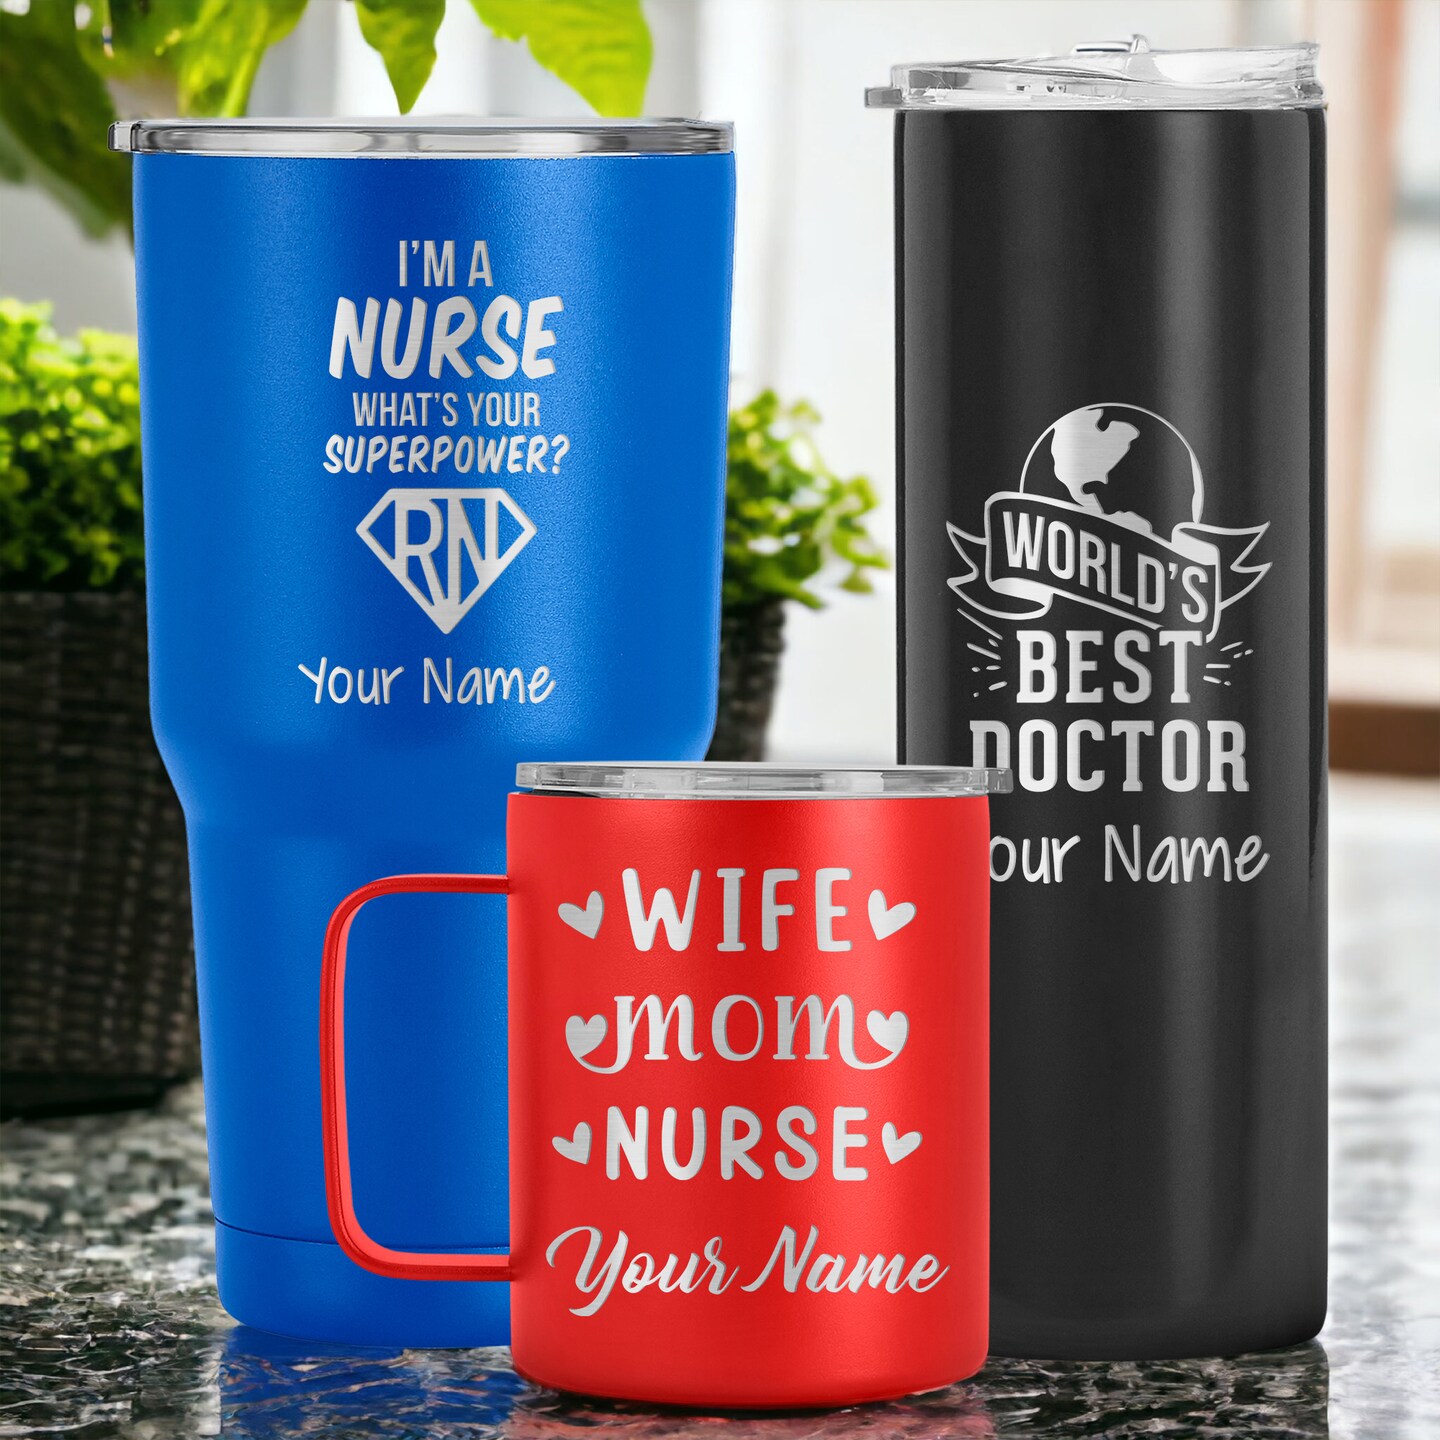 Personalized Engraved Nurse Tumbler Cup, Nurse Graduation Gift